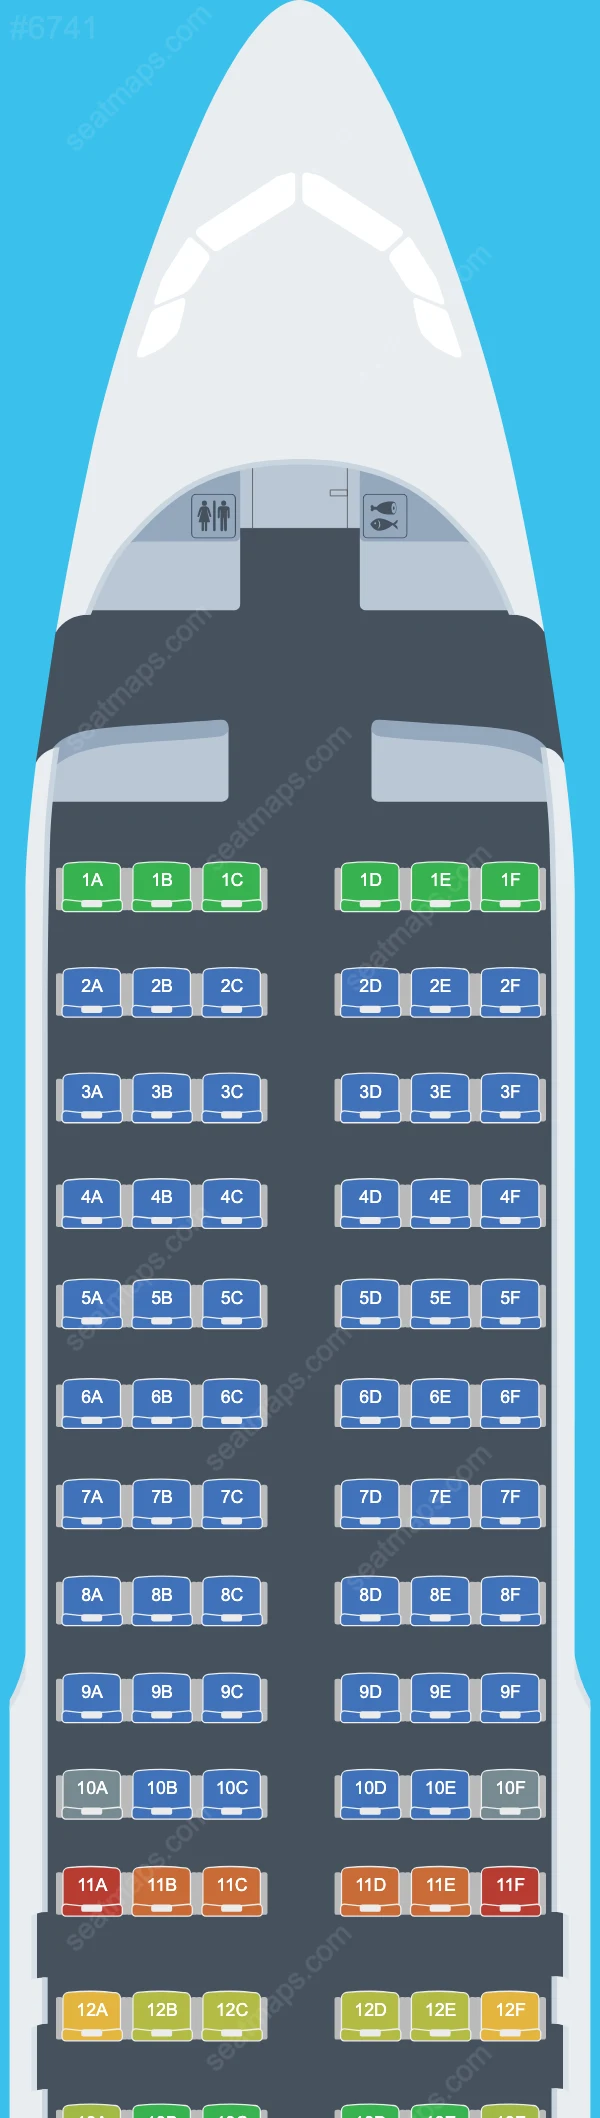 Myanmar Airways International Airbus A320 Seat Maps A320-200 V.2